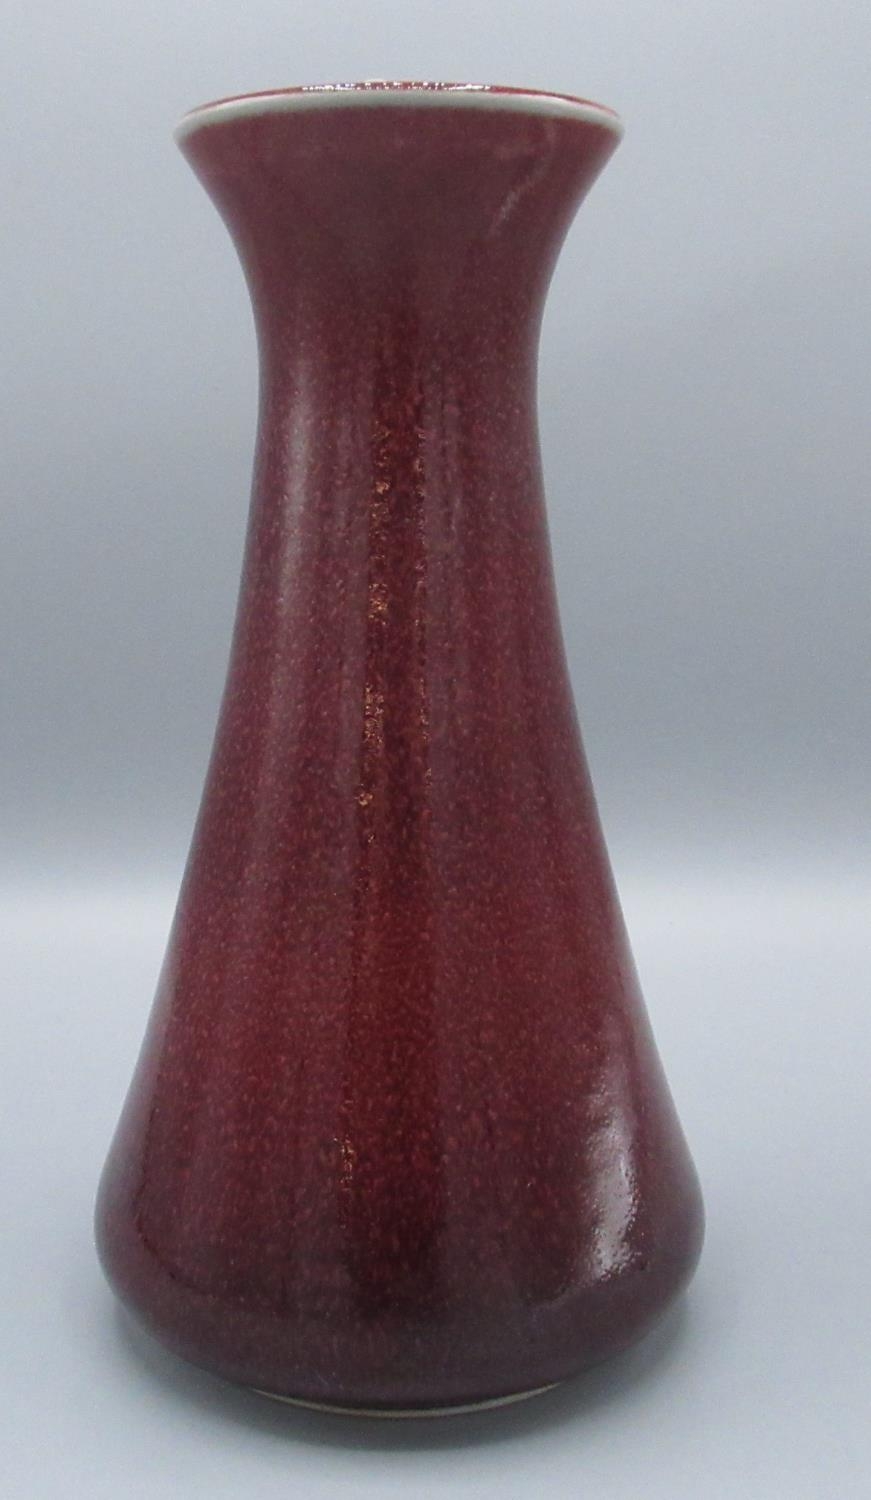 Cobridge stoneware vase with oxblood glaze, manufacturer's mark to base, H23cm